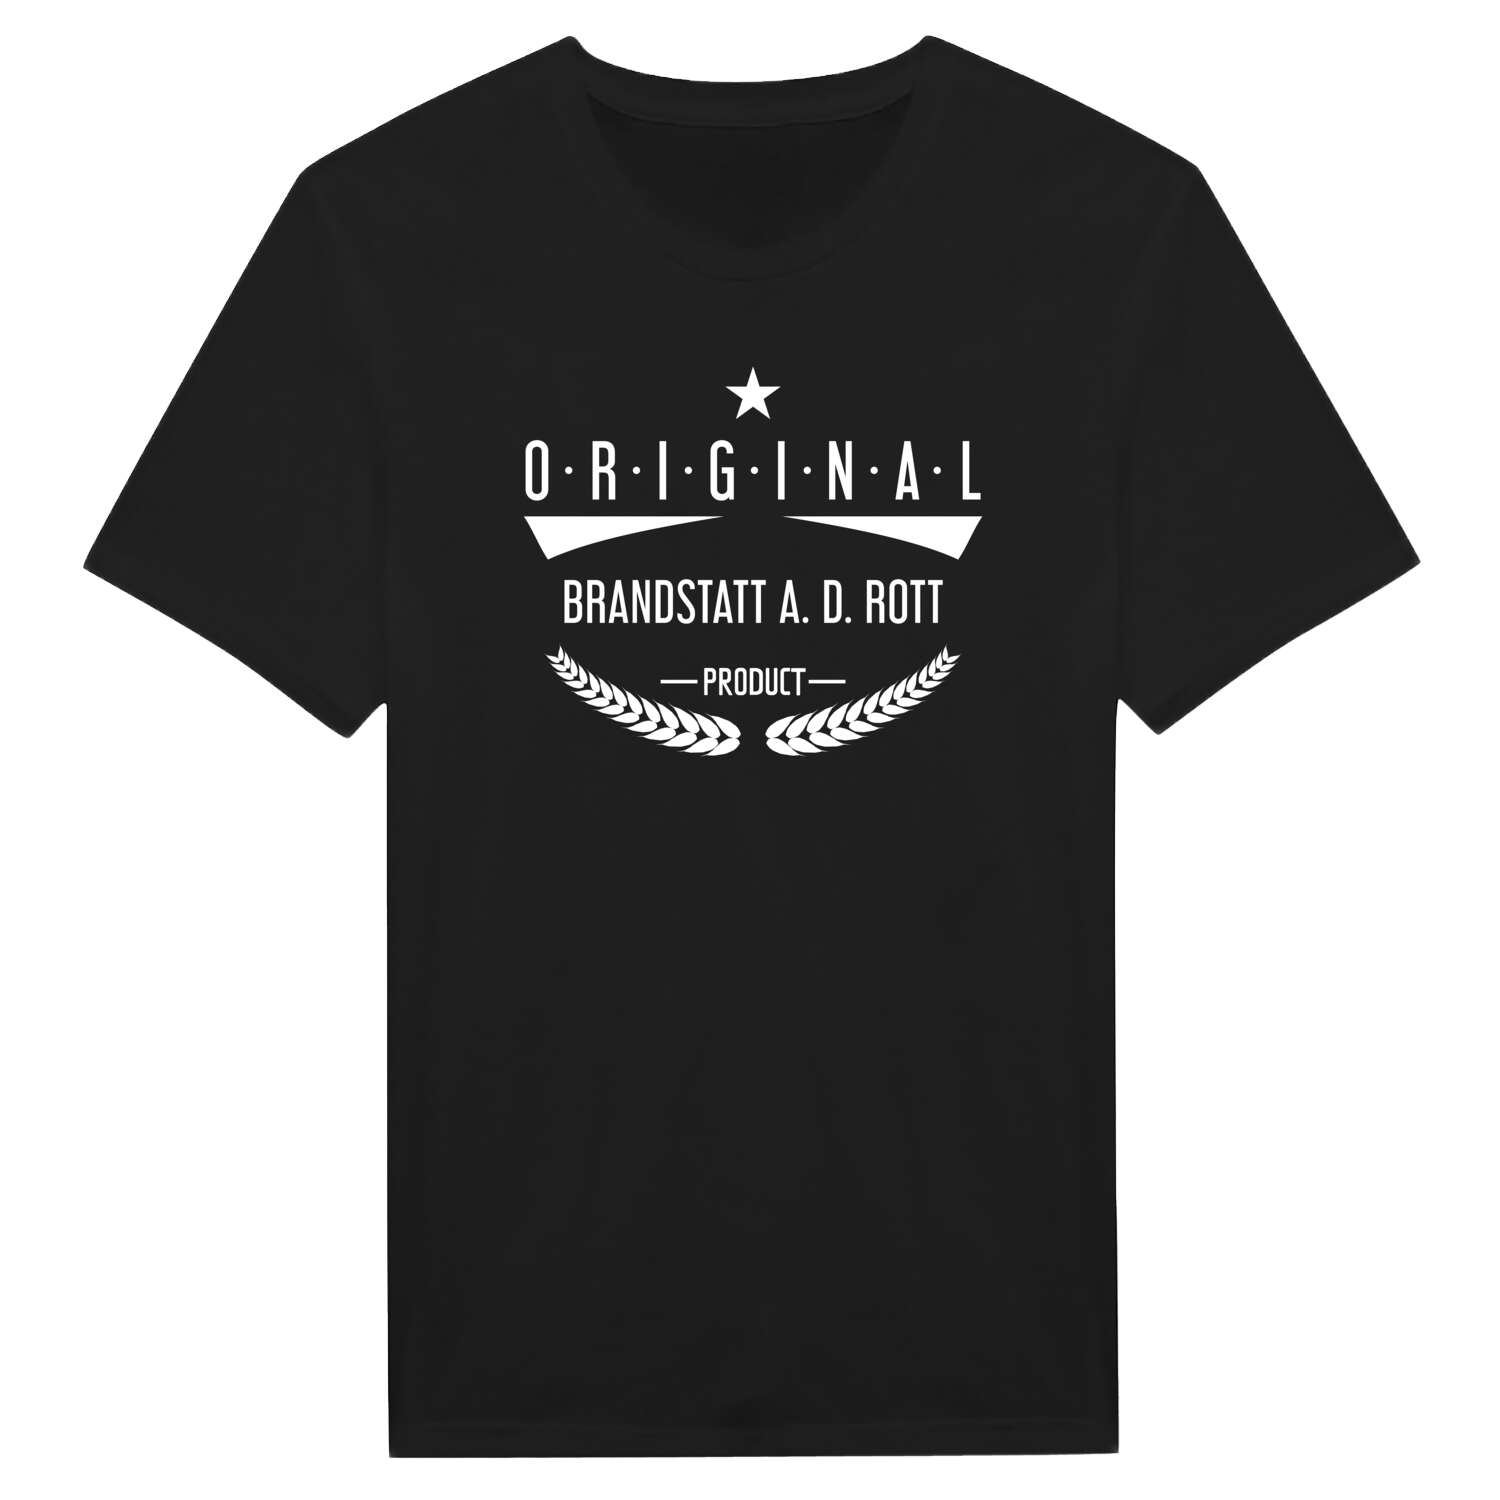 Brandstatt a. d. Rott T-Shirt »Original Product«